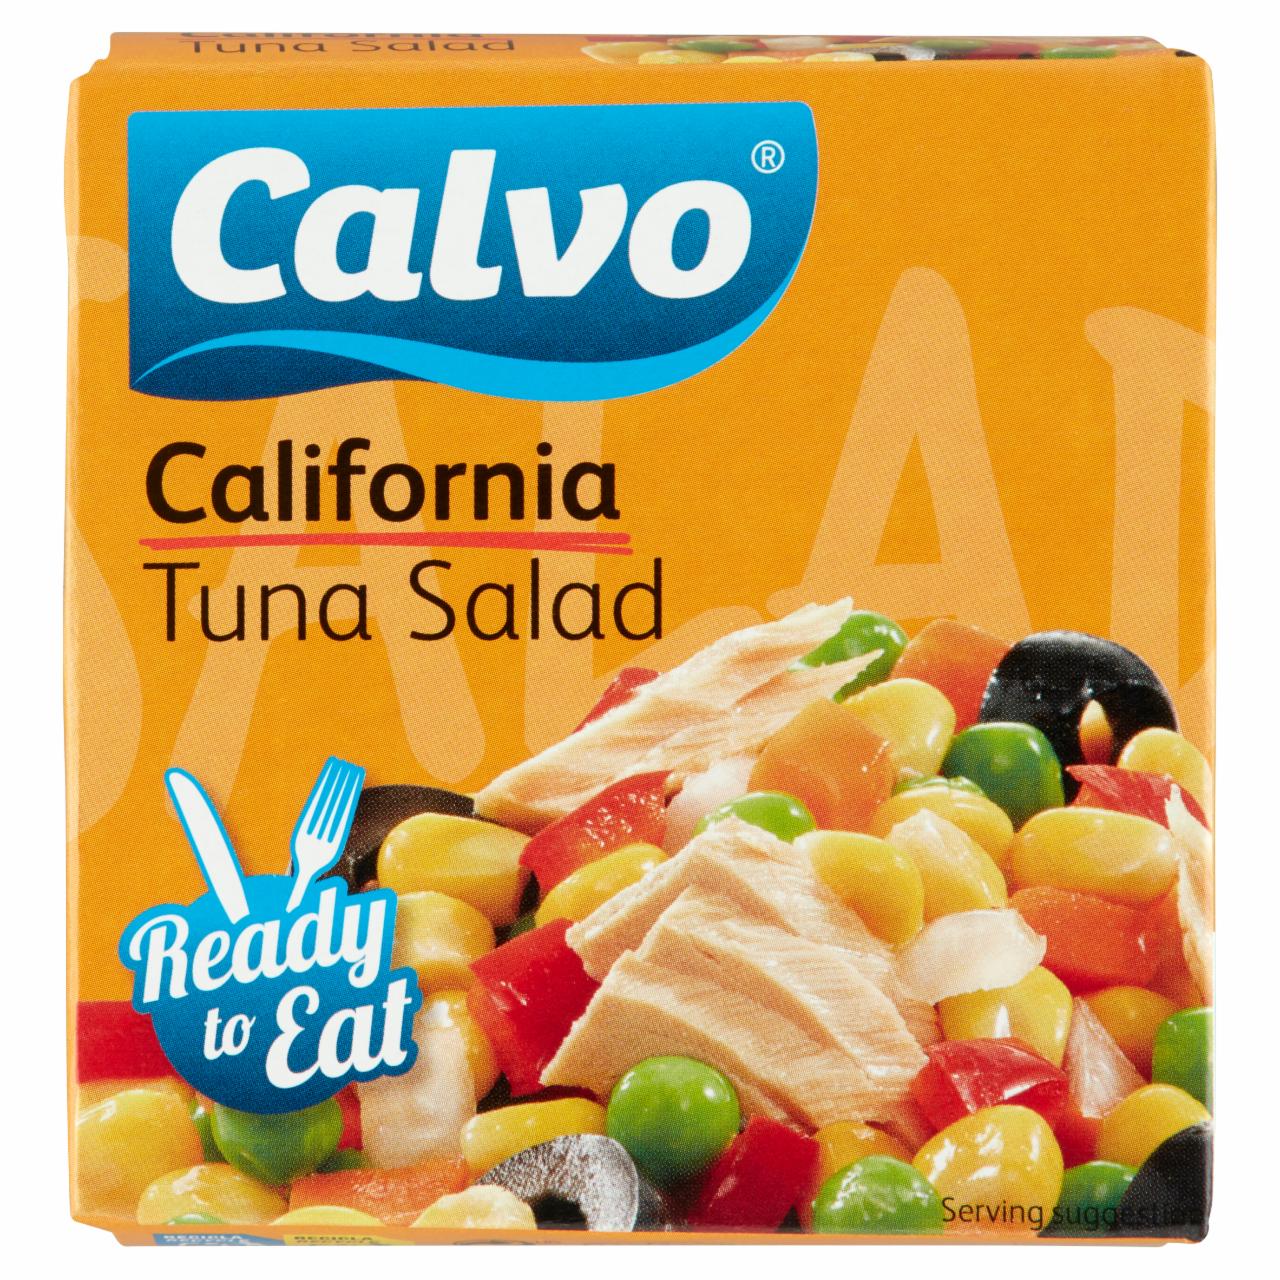 Képek - Calvo kaliforniai tonhalsaláta 150 g